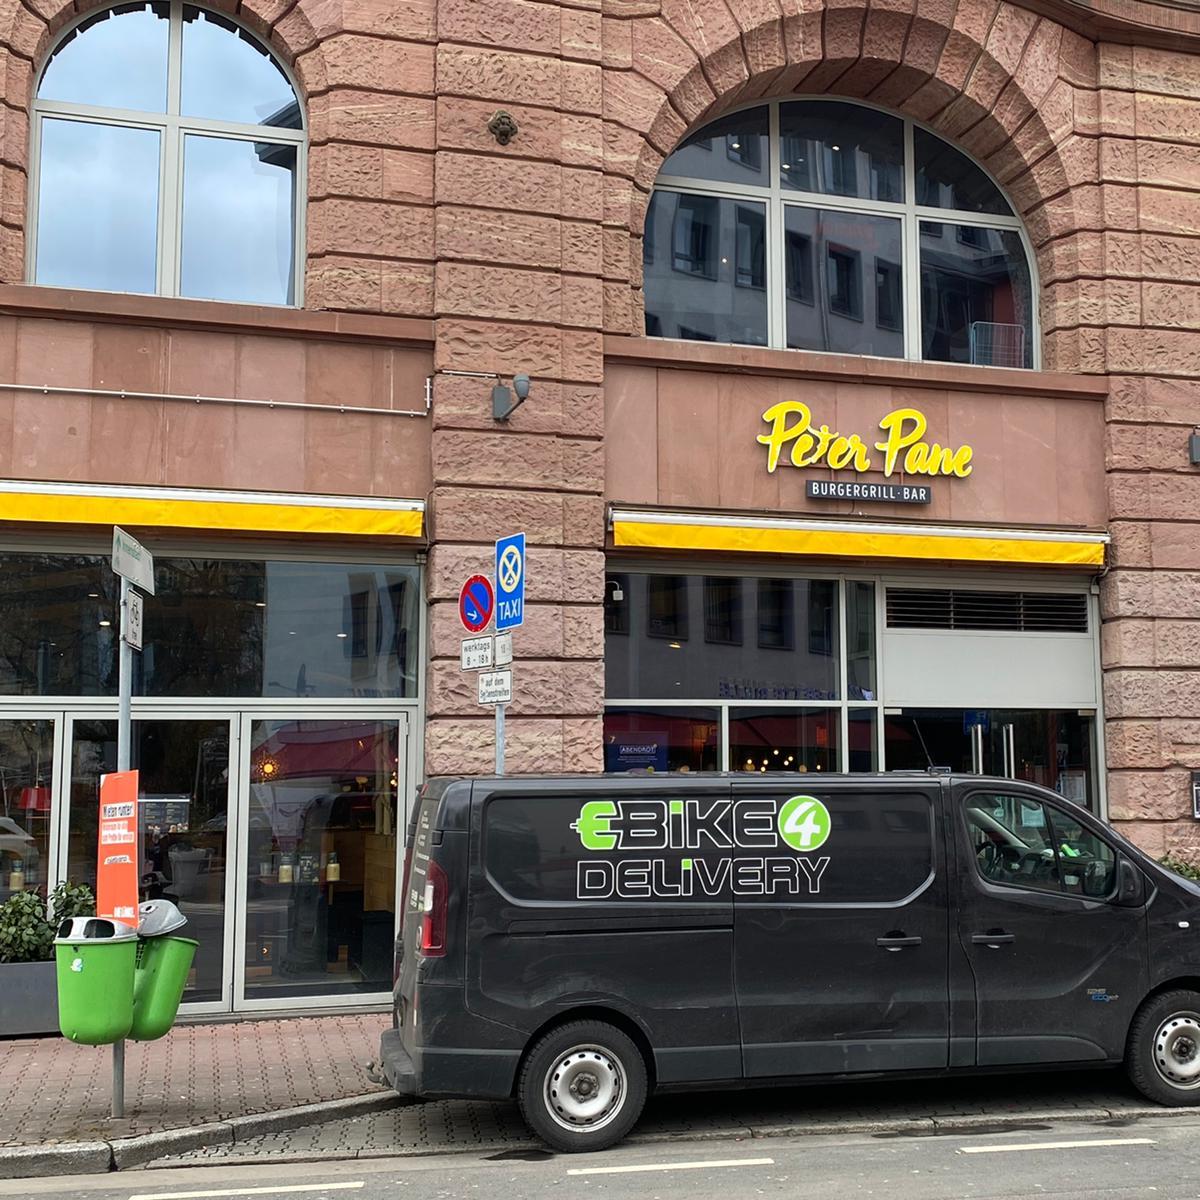 Restaurant "PETER PANE Frankfurt Burgergrill & Bar" in Frankfurt am Main